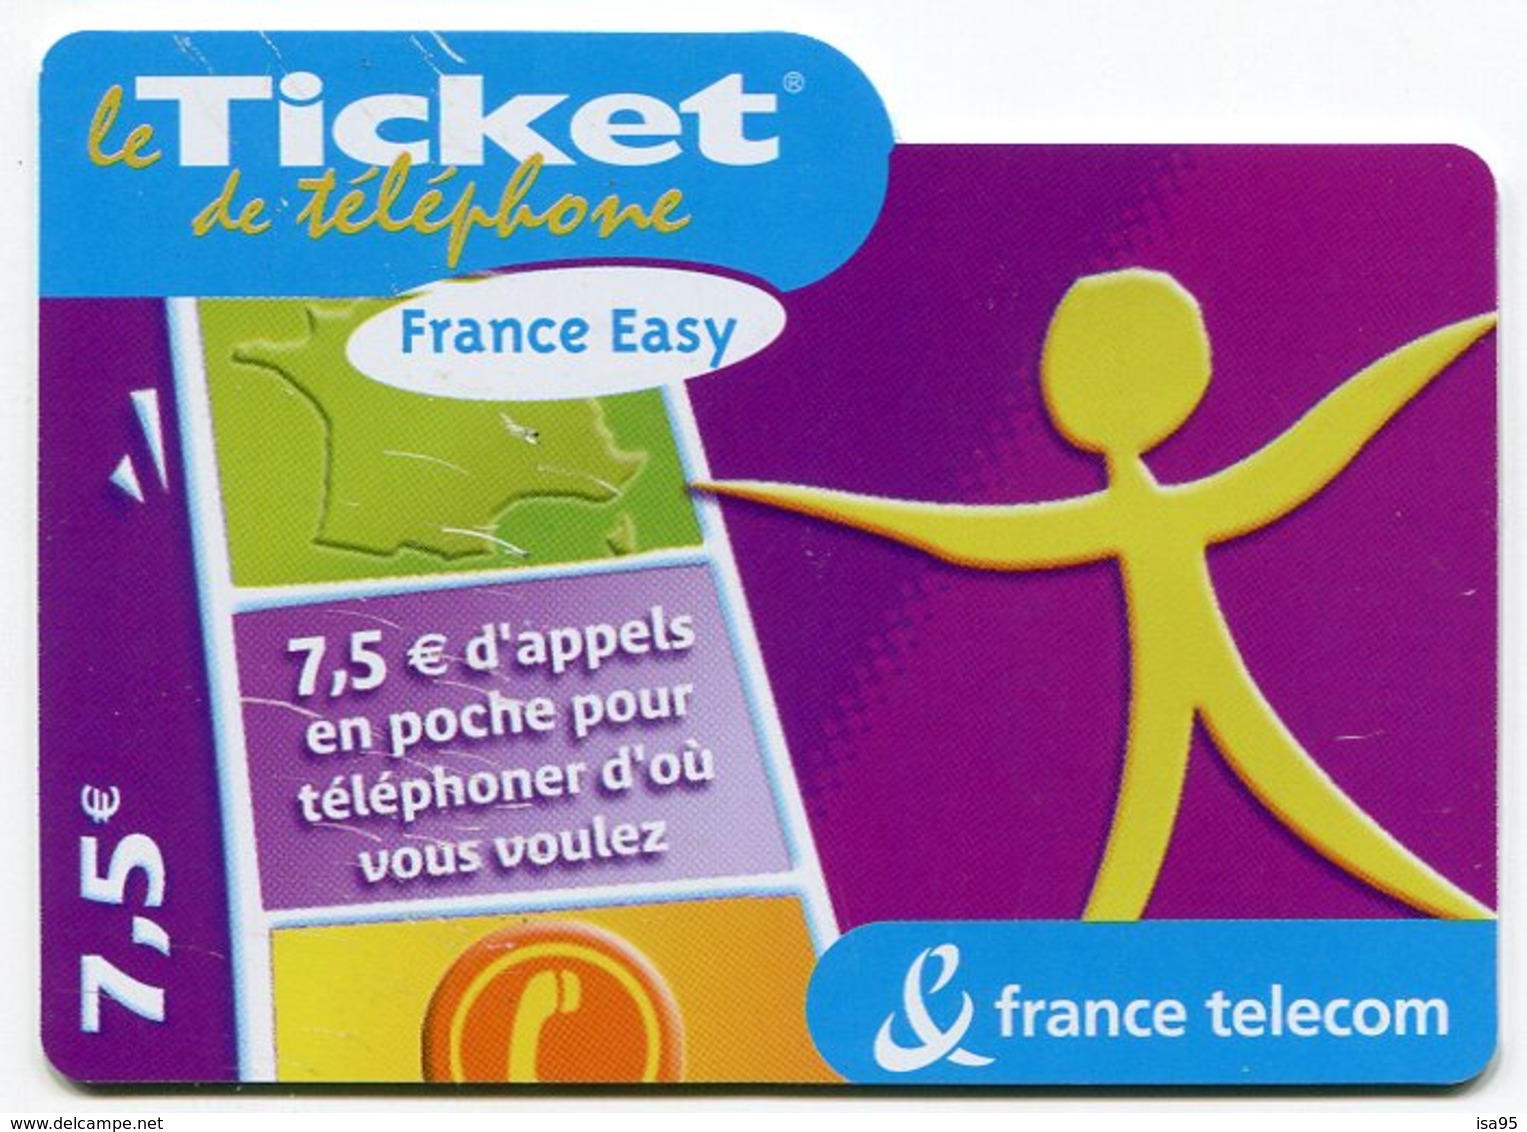 TELECARTE-LE TICKET DE TELEPHONE FRANCE EASY-2005-7.5€ - FT Tickets